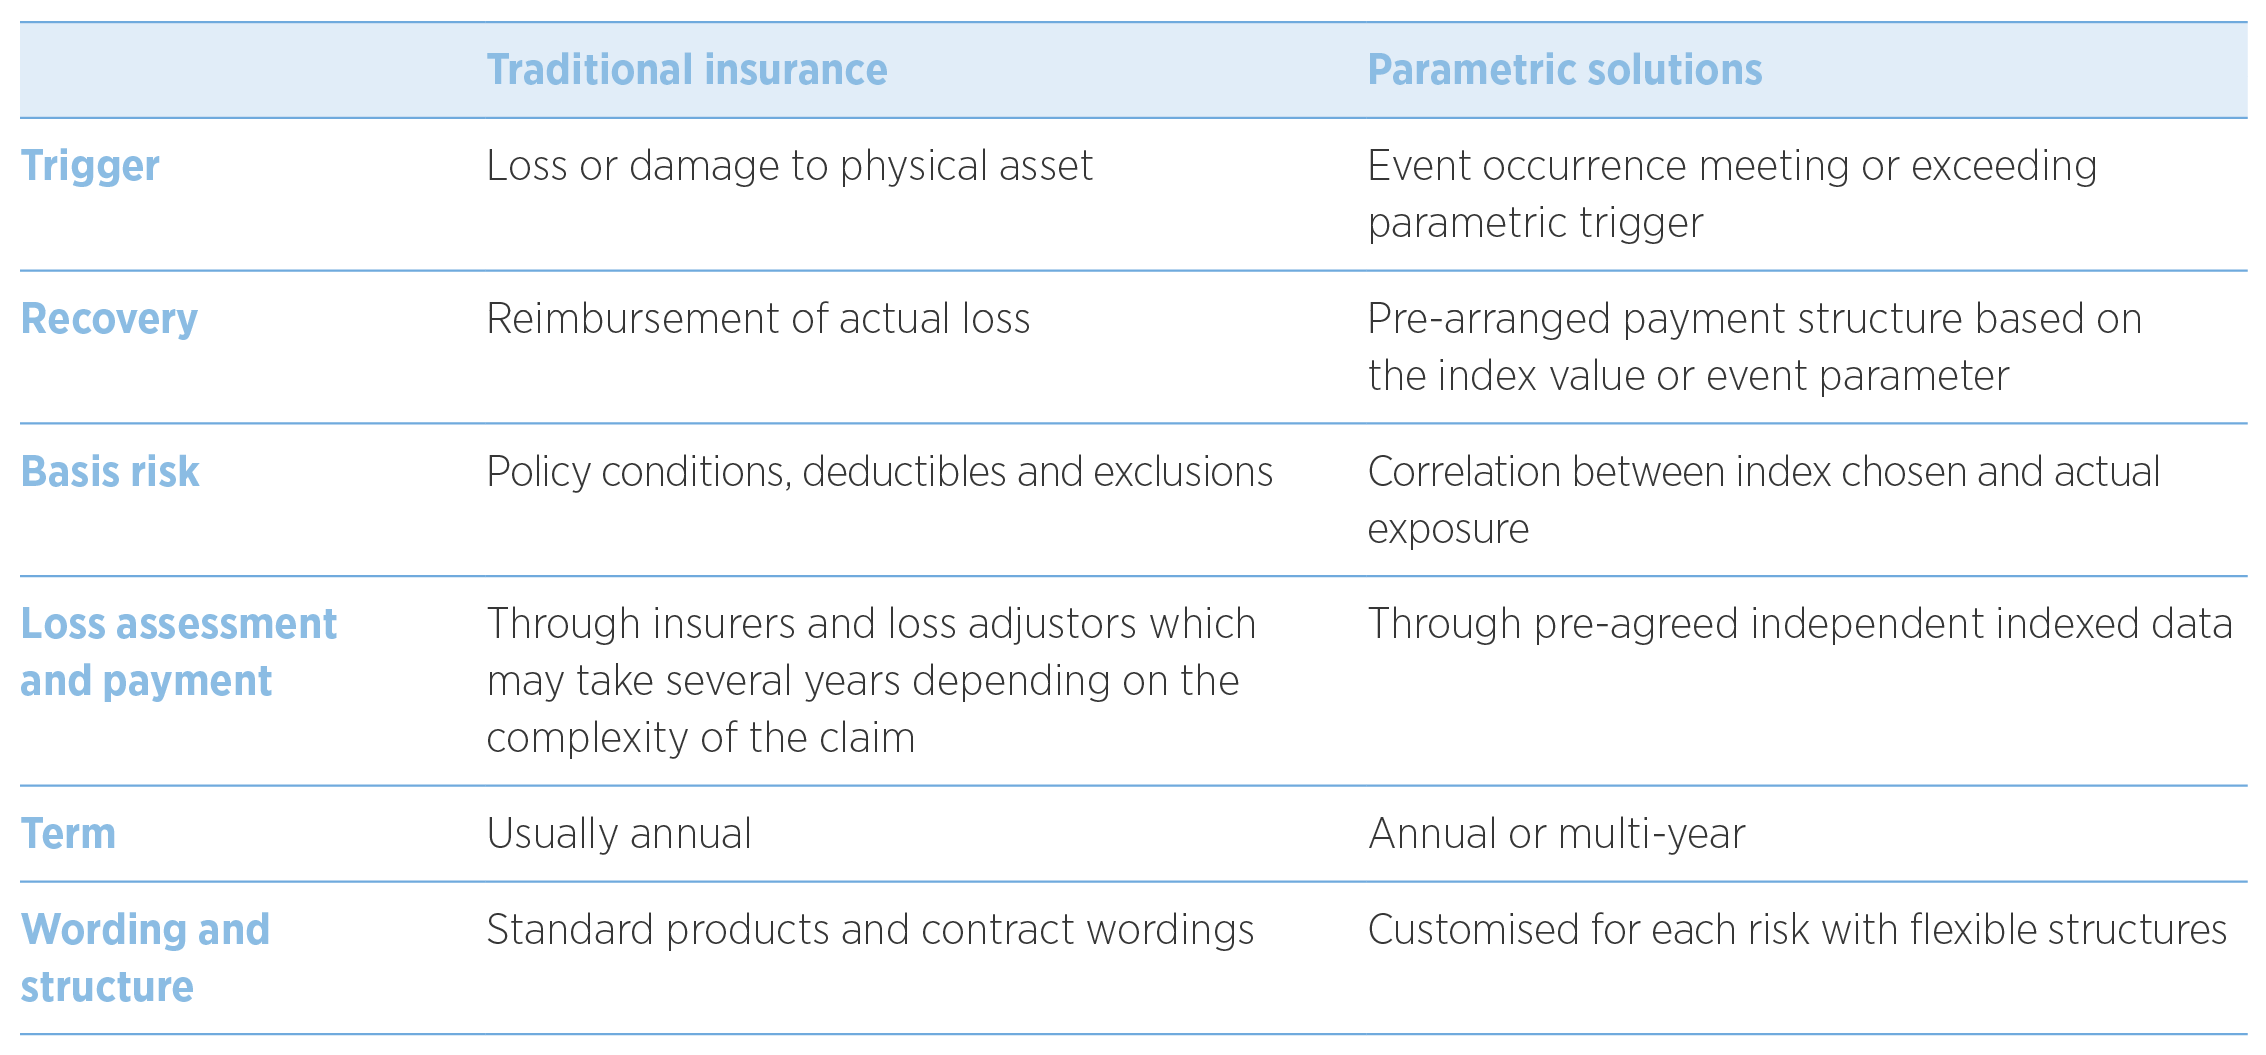 Traditional insurance vs Parametric solutions